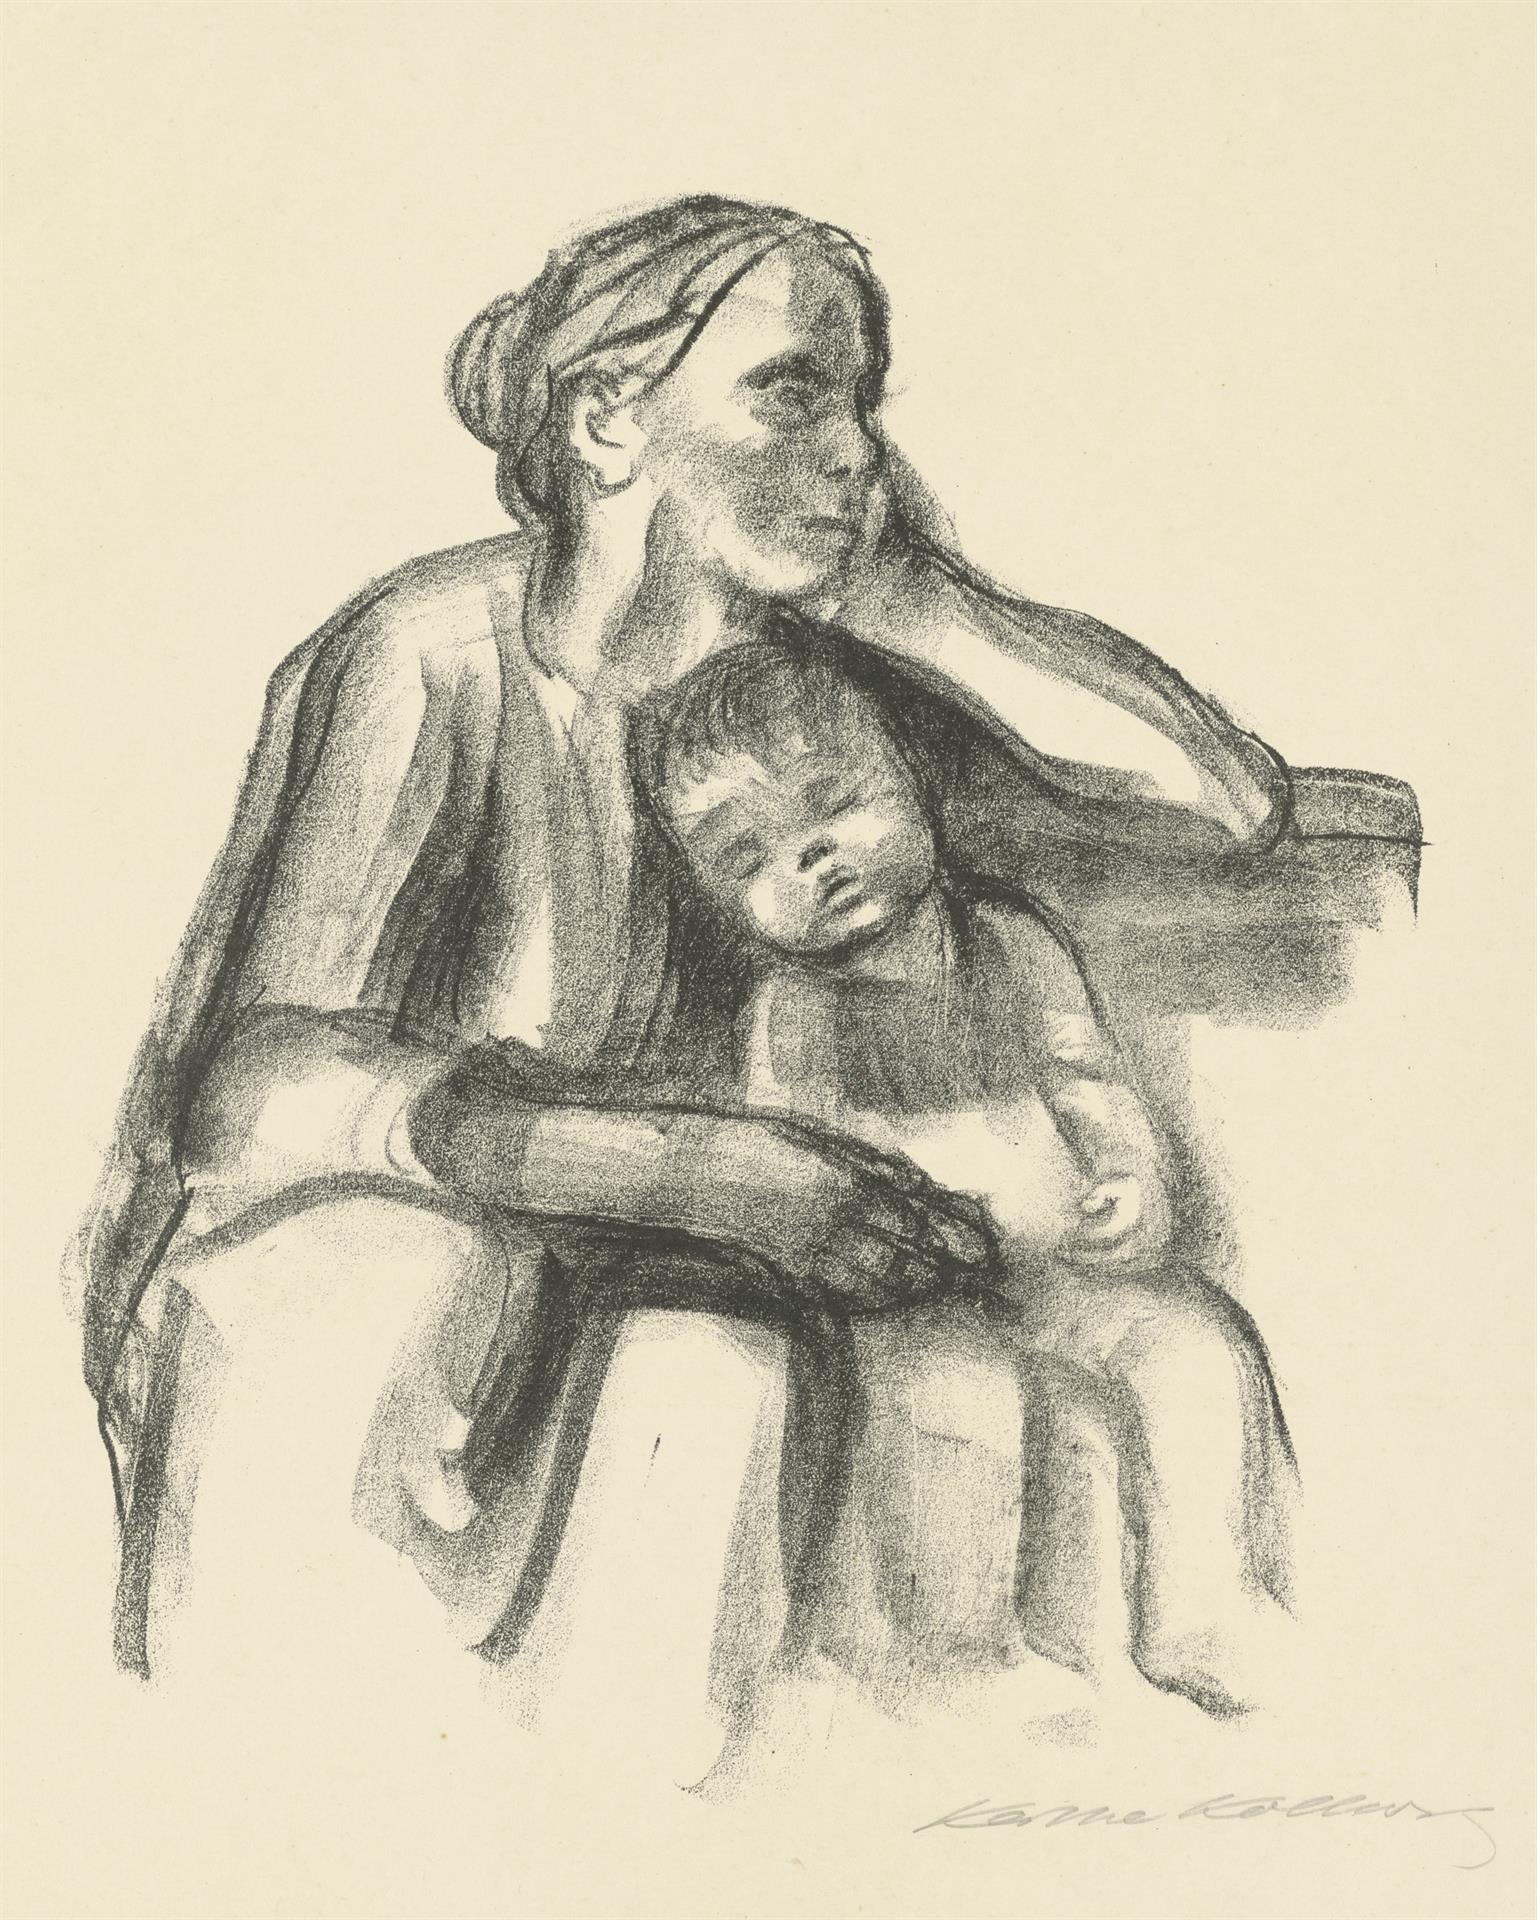 Käthe Kollwitz, Worker Woman with Sleeping Child, 1927, crayon lithograph (transfer), Kn 234 I c, Cologne Kollwitz Collection © Käthe Kollwitz Museum Köln